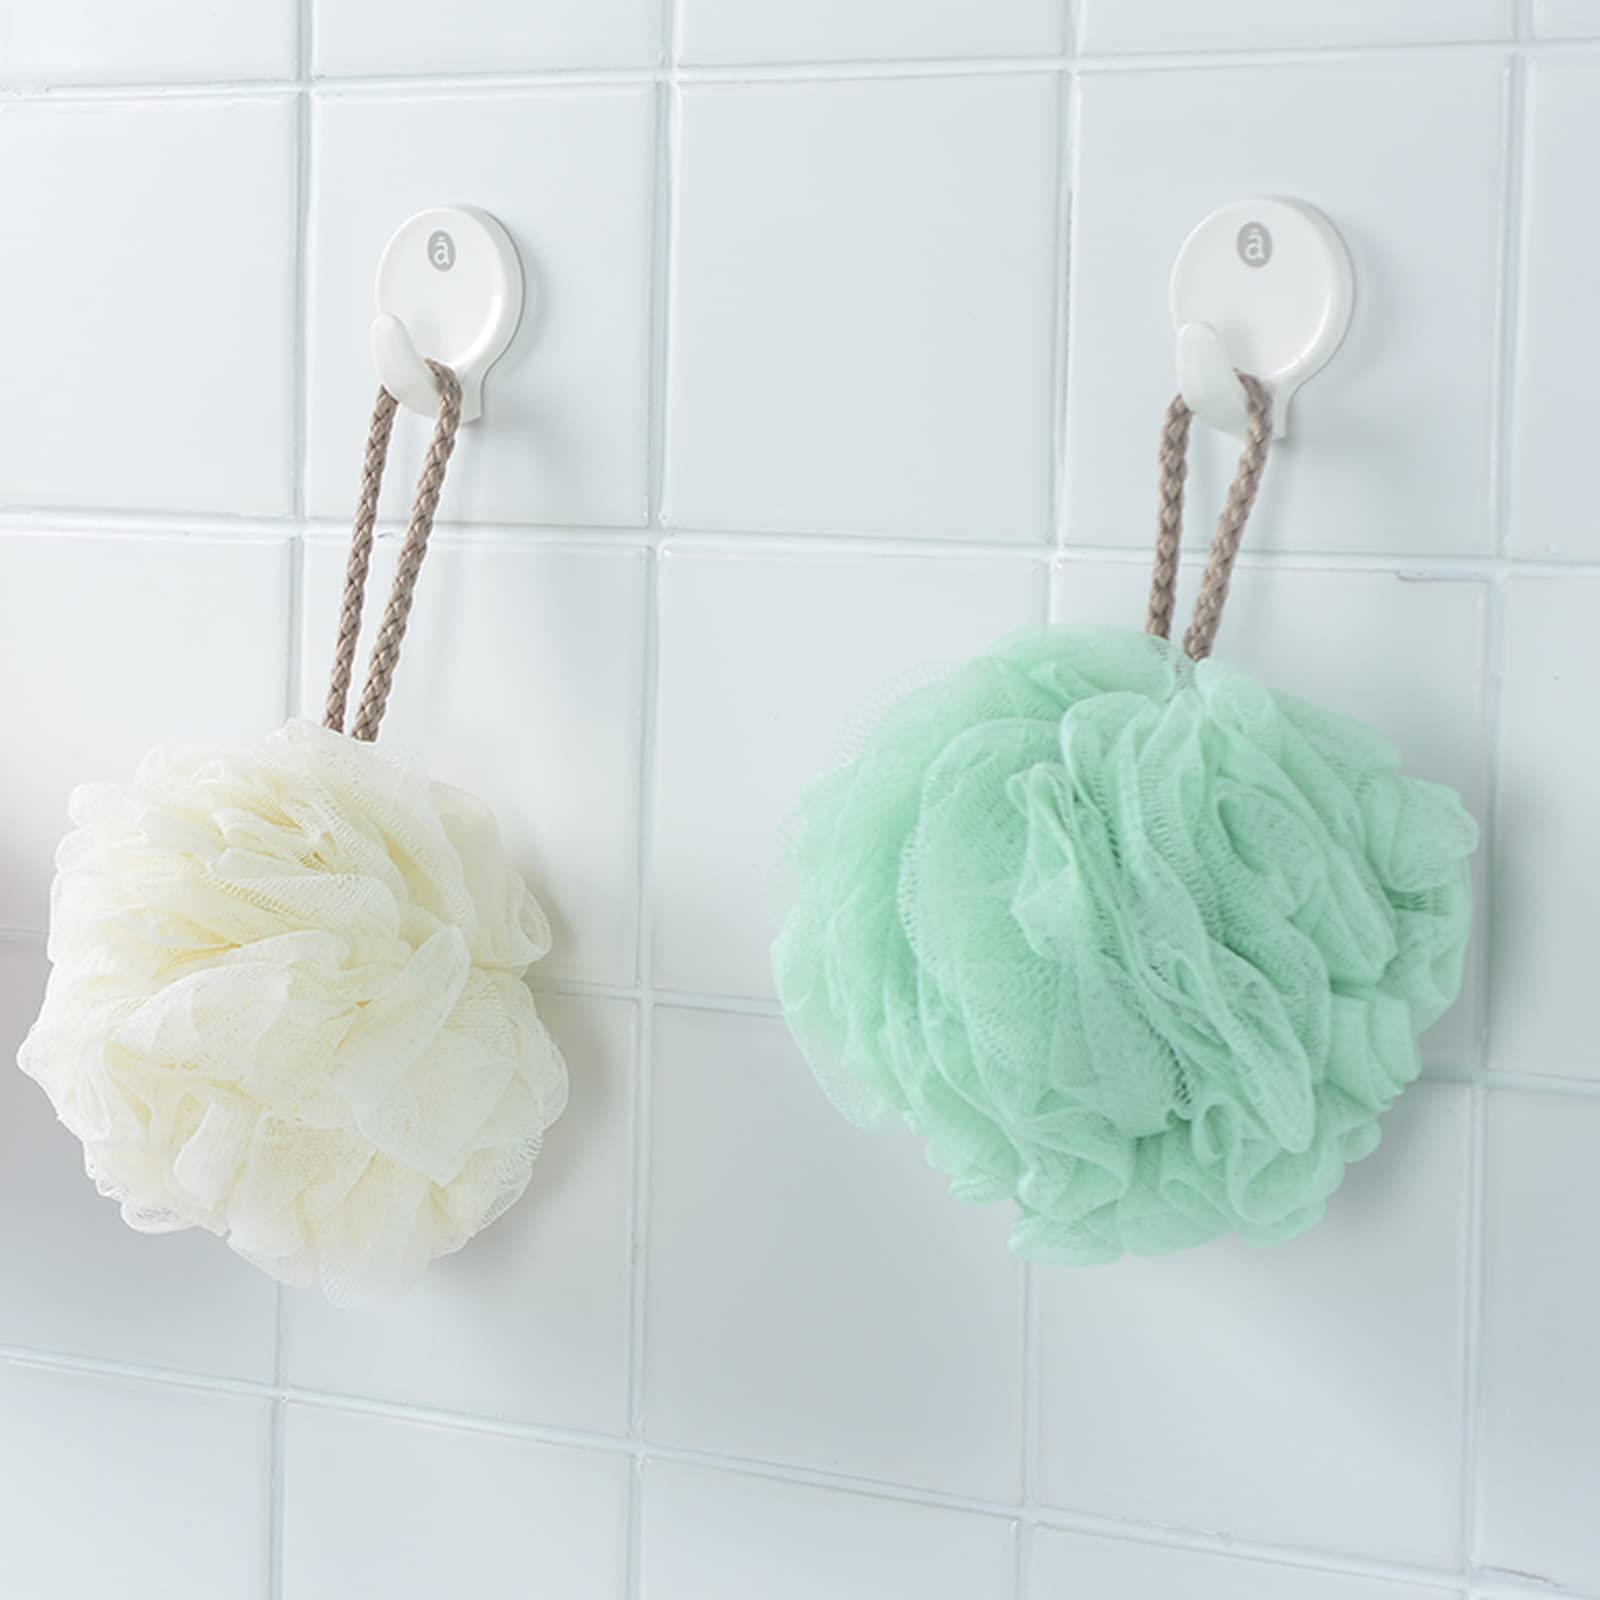 Fu Store Bath Sponges Shower Loofahs 50g Mesh Balls Sponge 4 Solid Colors for Body Wash Bathroom Men Women - 4 Pack Scrubber Cleaning Loofah Bathing Accessories